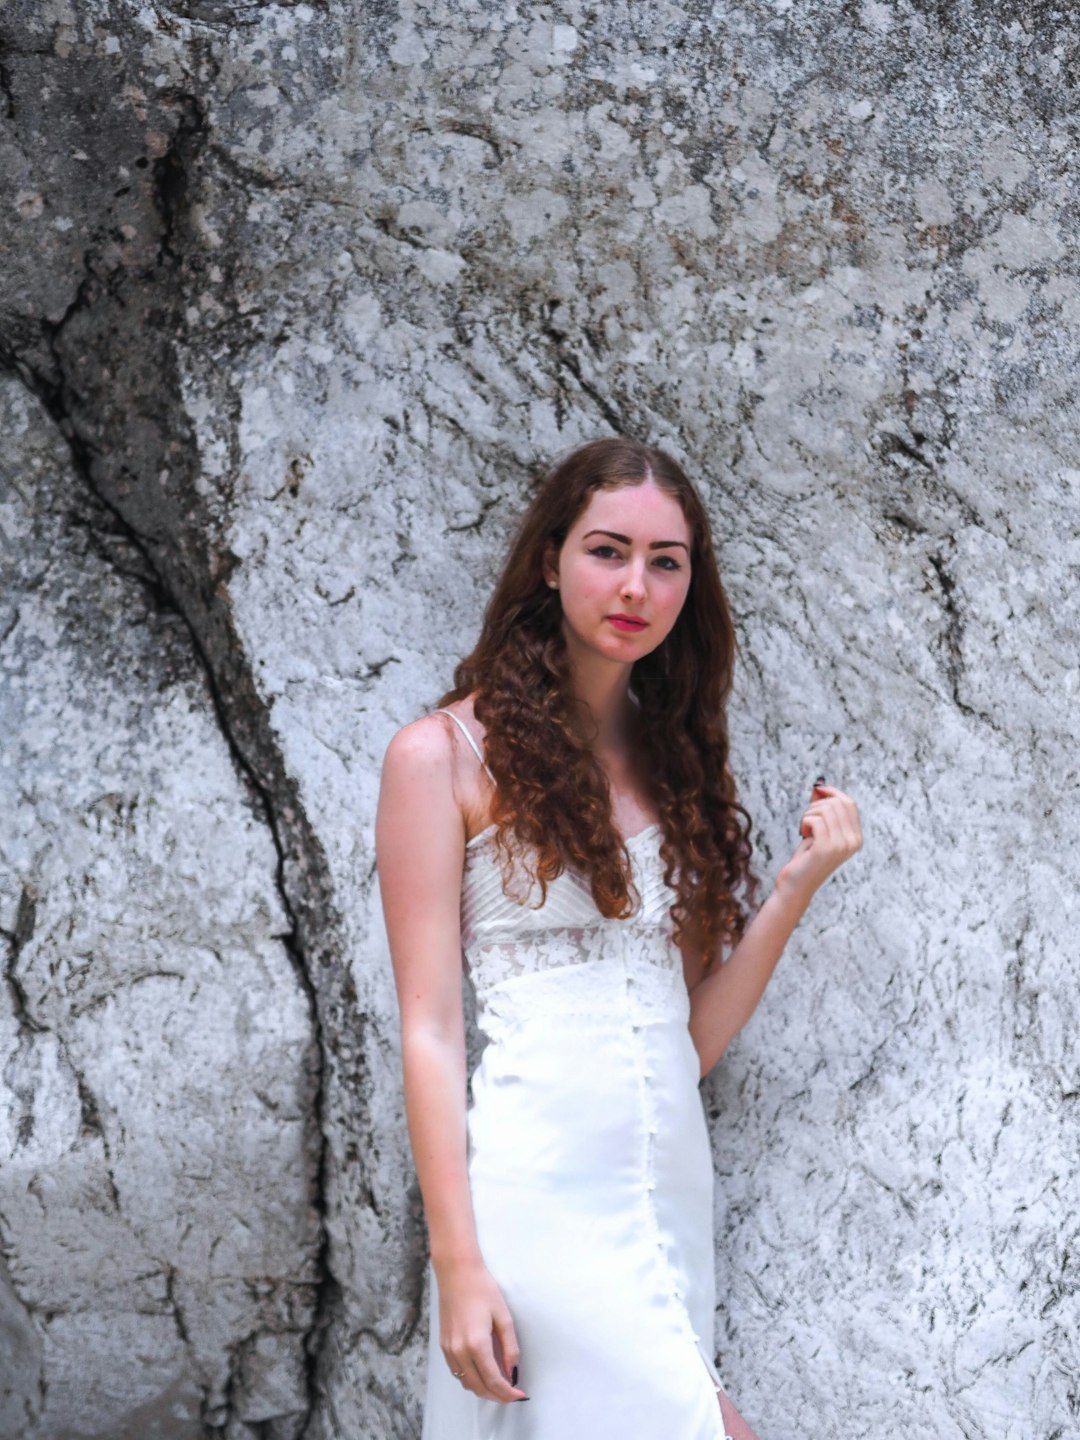 woman wearing white spaghetti strap dress standing near gray rock